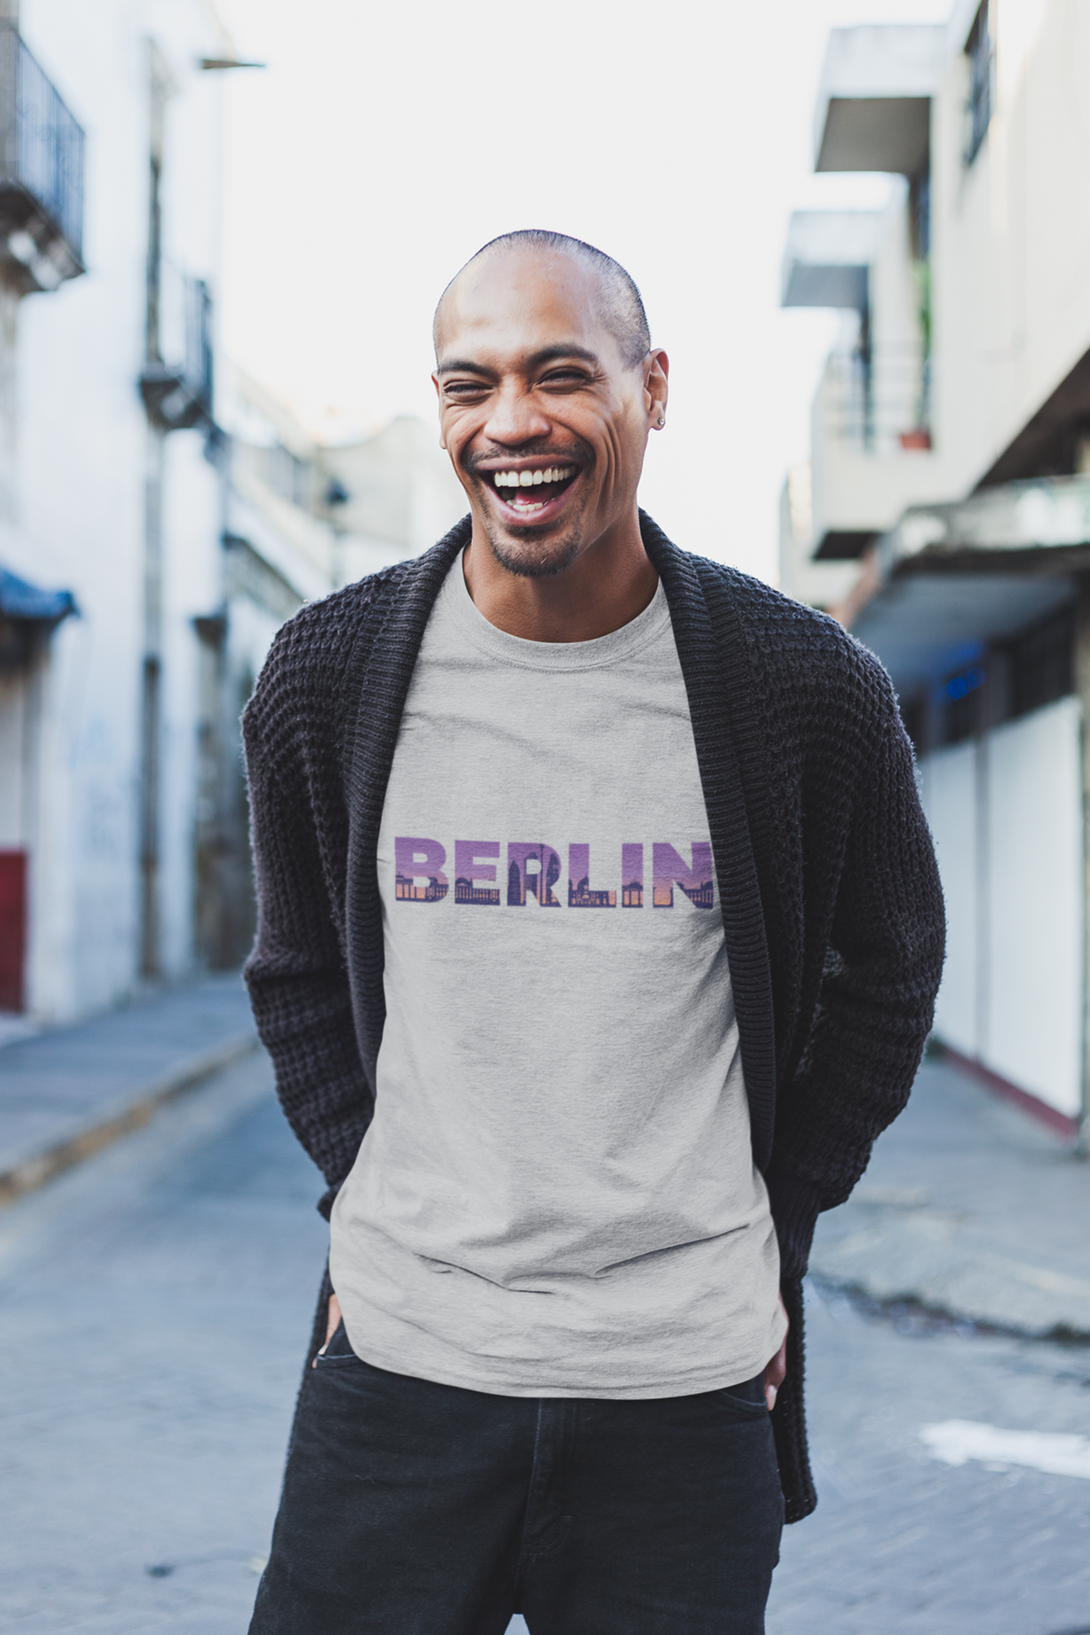 Berlin Skyline Printed T-Shirt For Men - WowWaves - 4